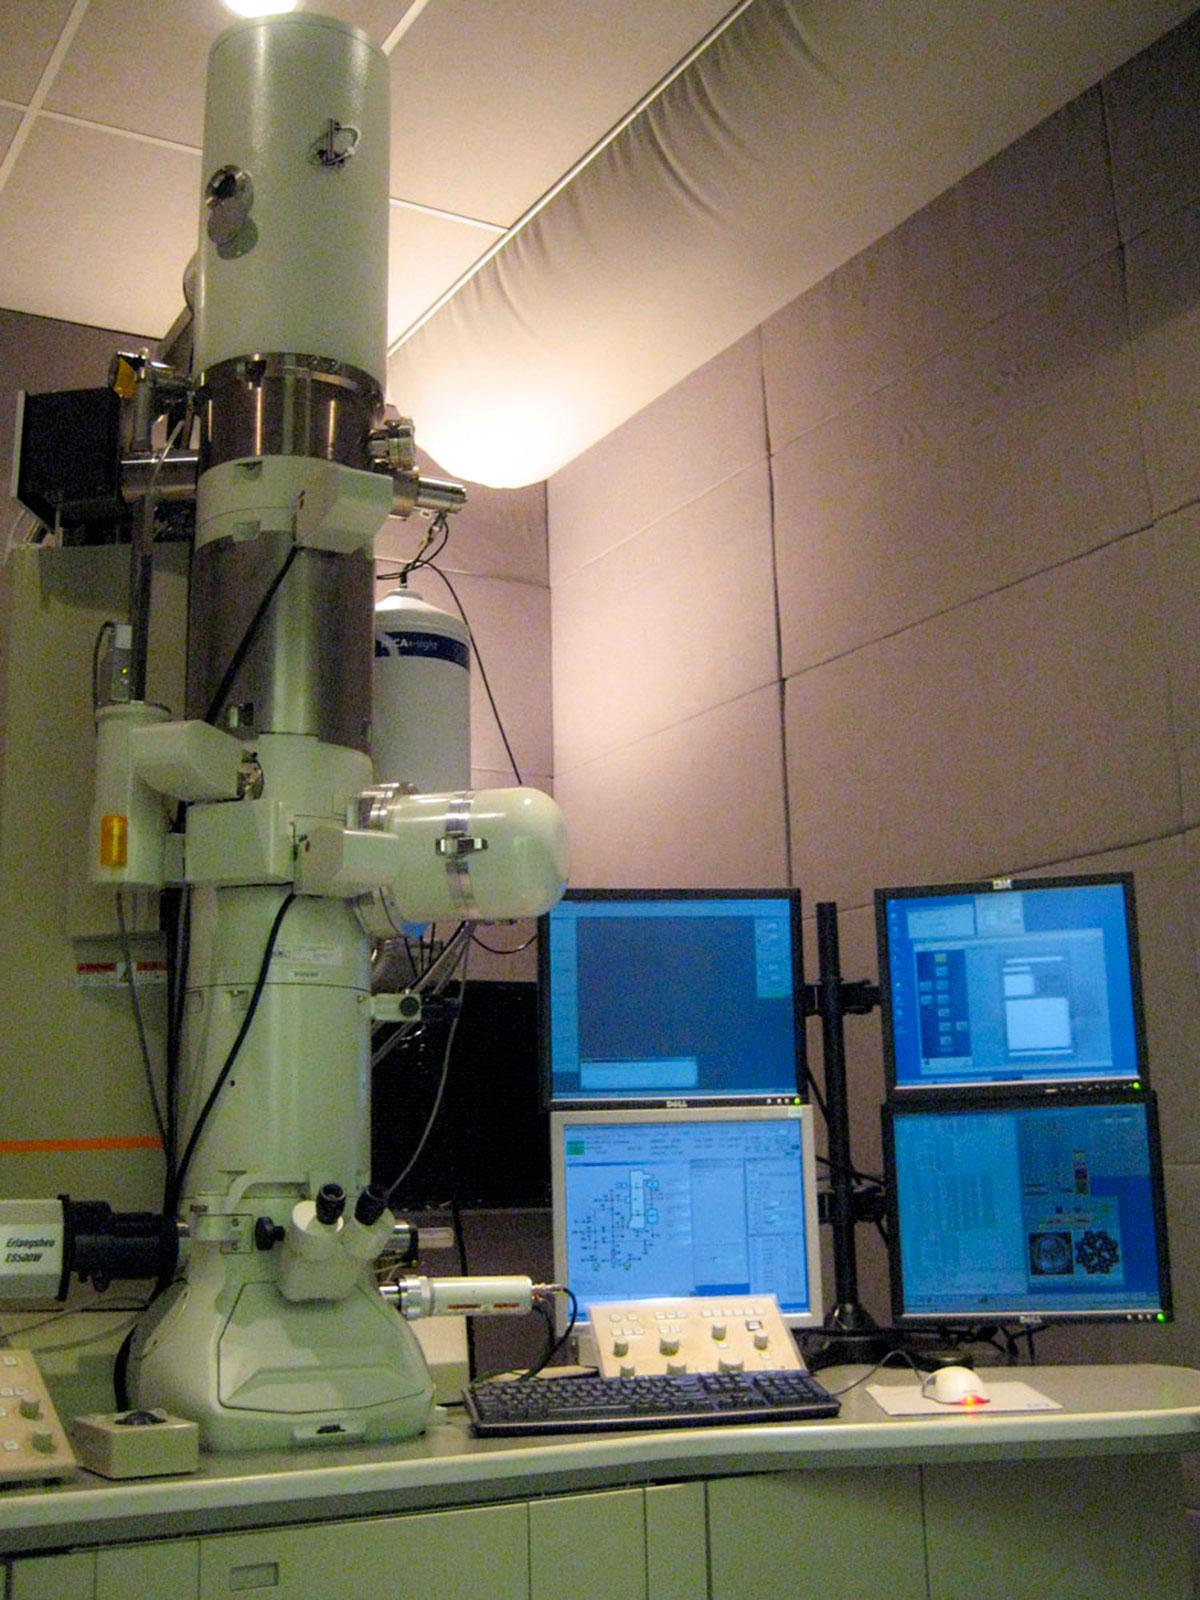 AberrationCorrected Scanning Transmission Electron Microscopy Facility